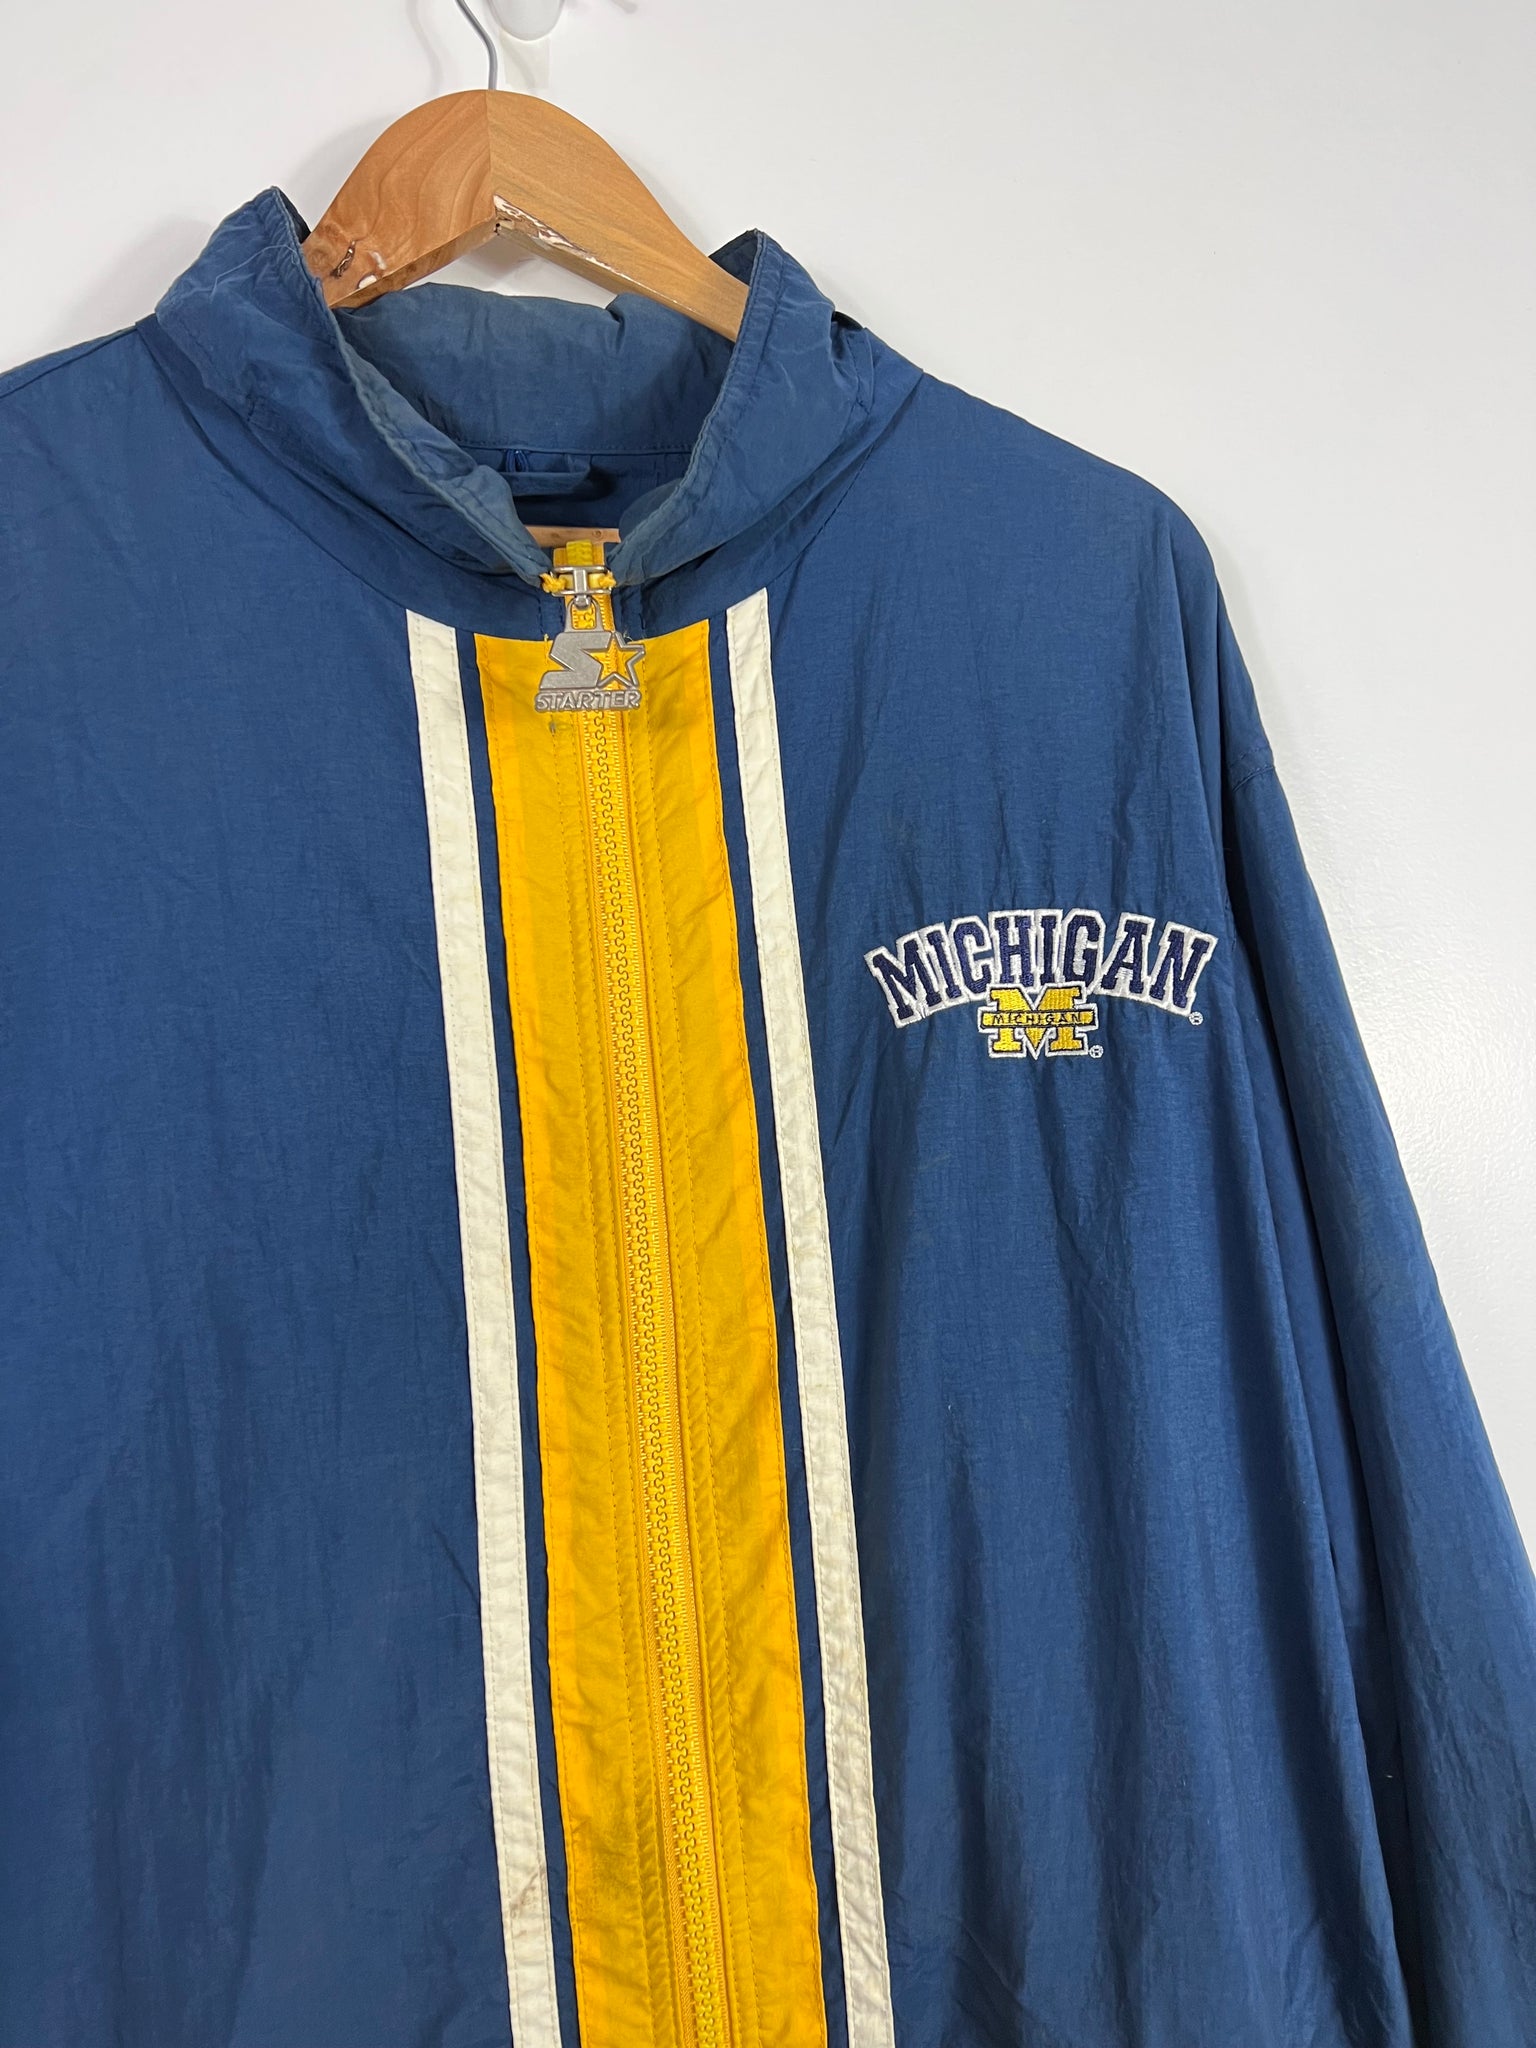 Vintage Michigan University Starter Jacket -  India